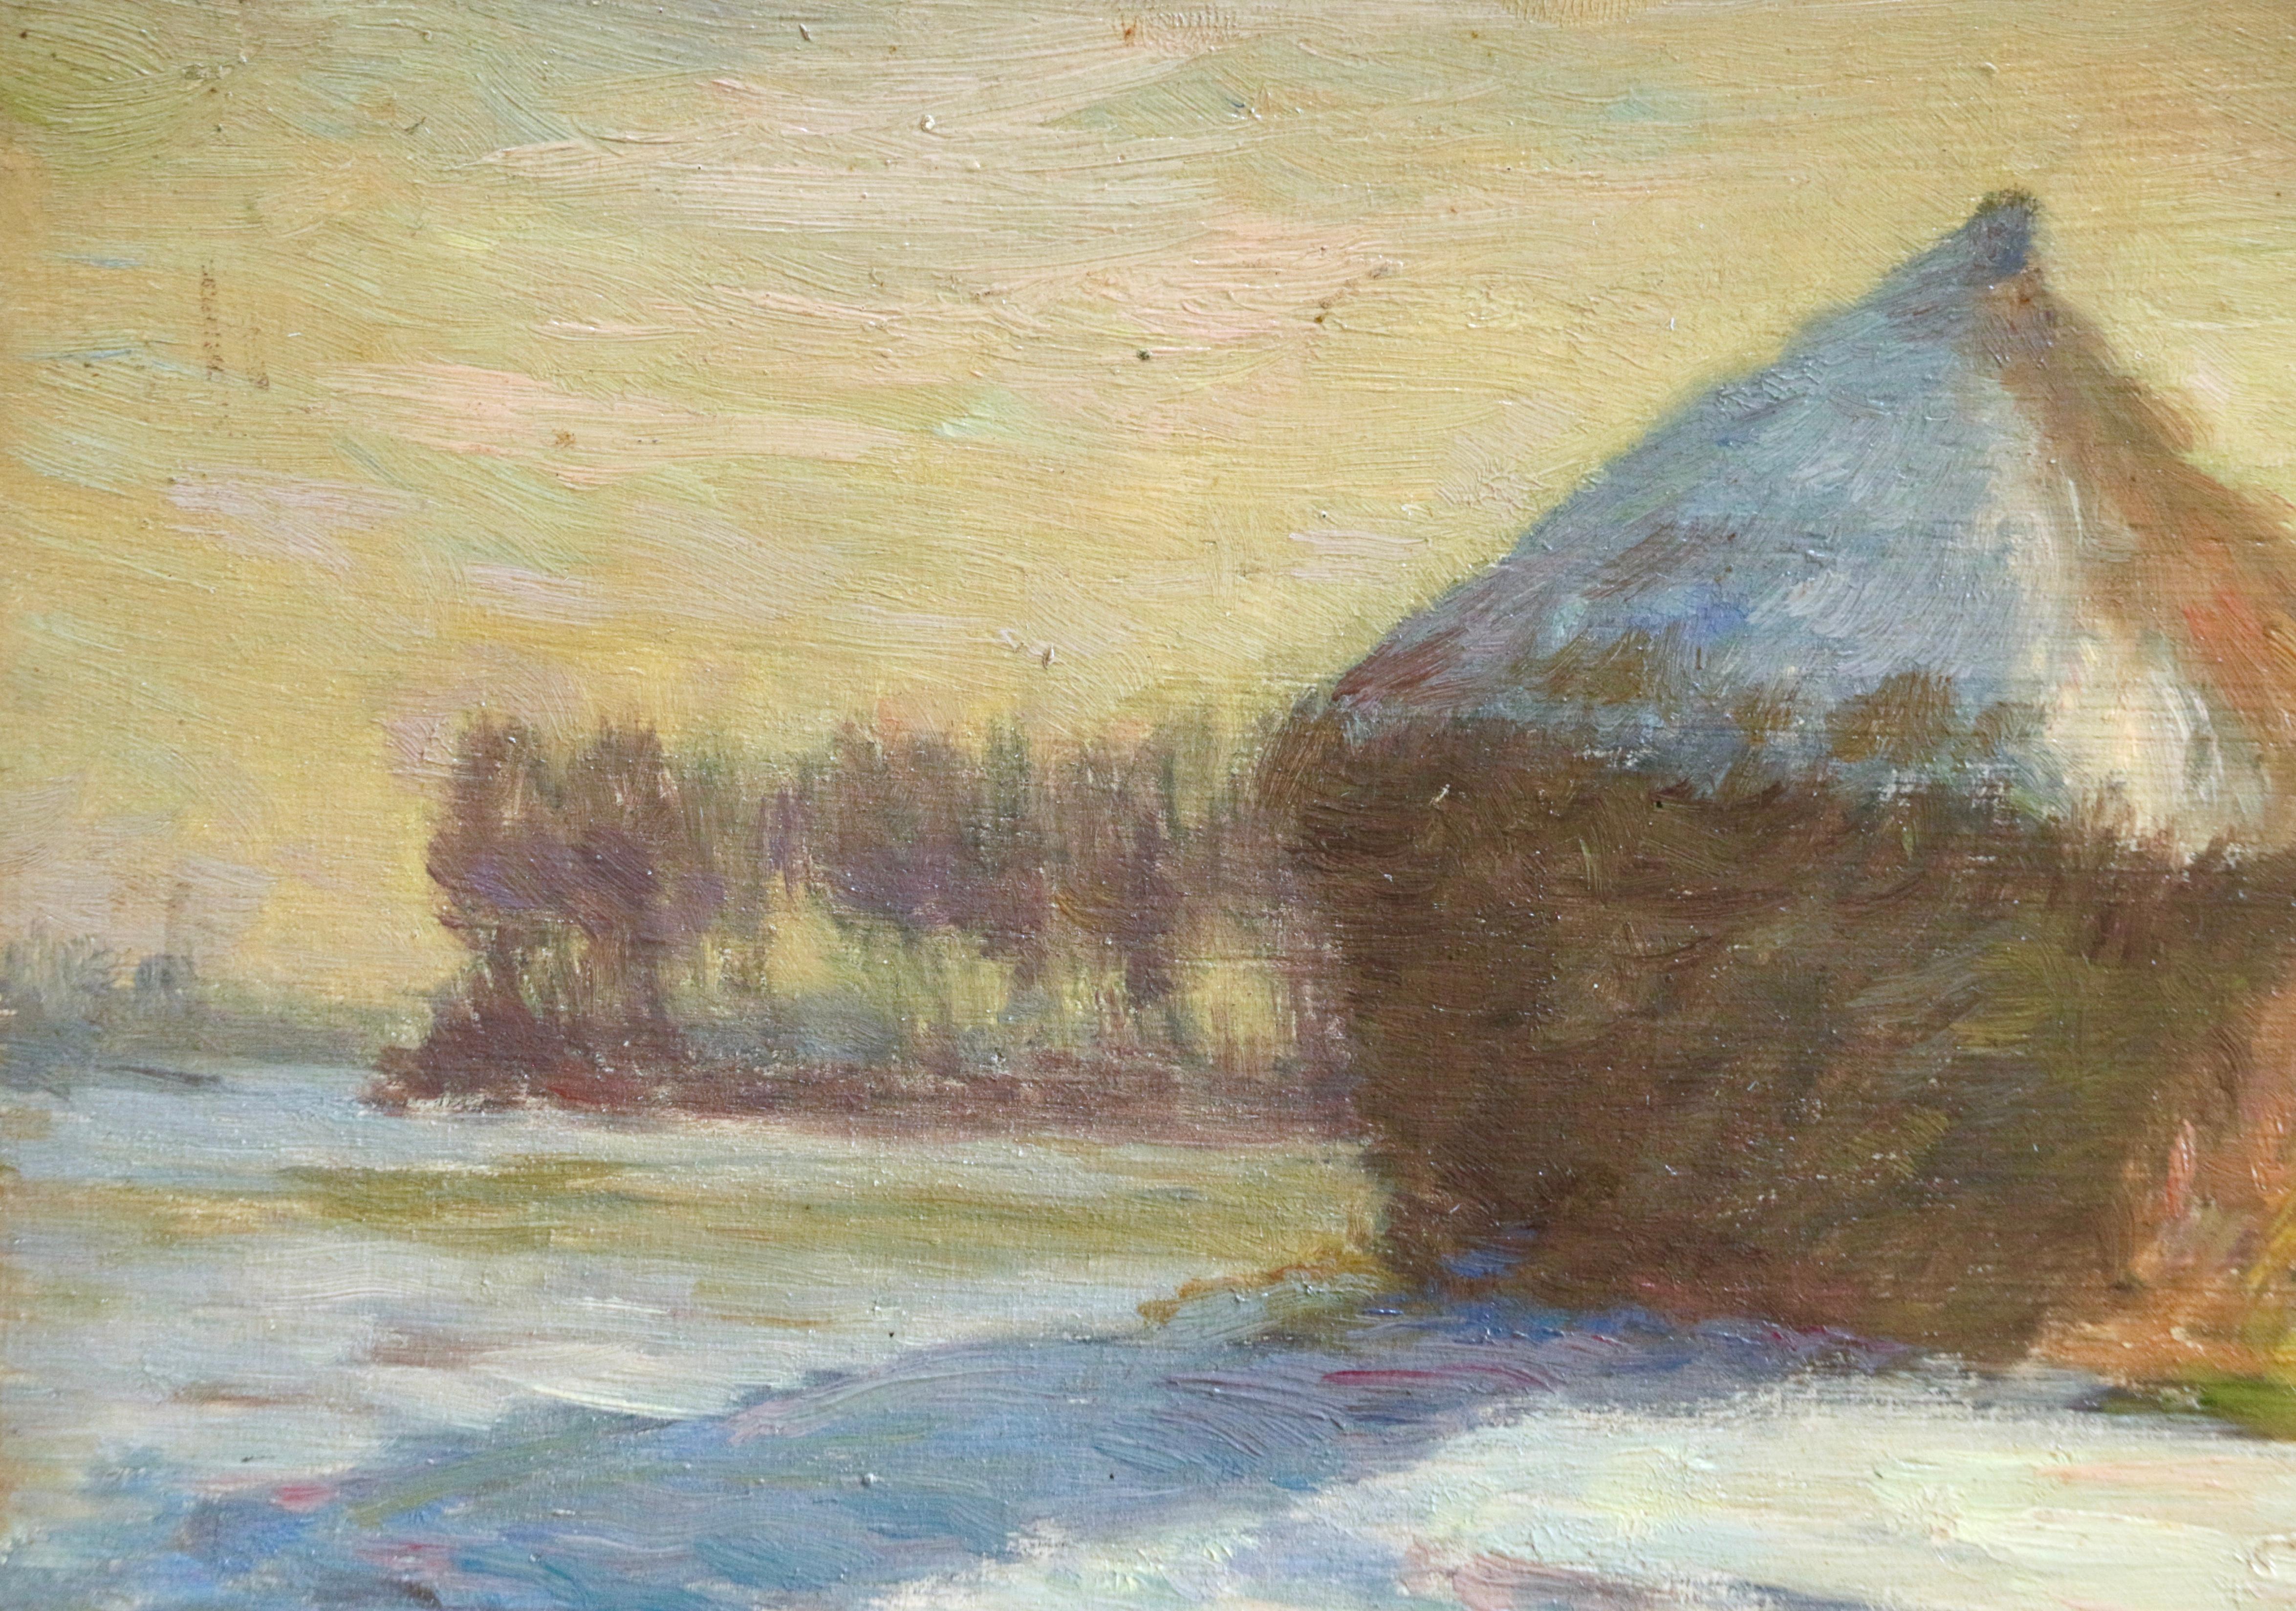 Haystacks - Snow - January 1902 - 19th Century Oil, Winter Landscape by H Duhem  - Brown Landscape Painting by Henri Duhem